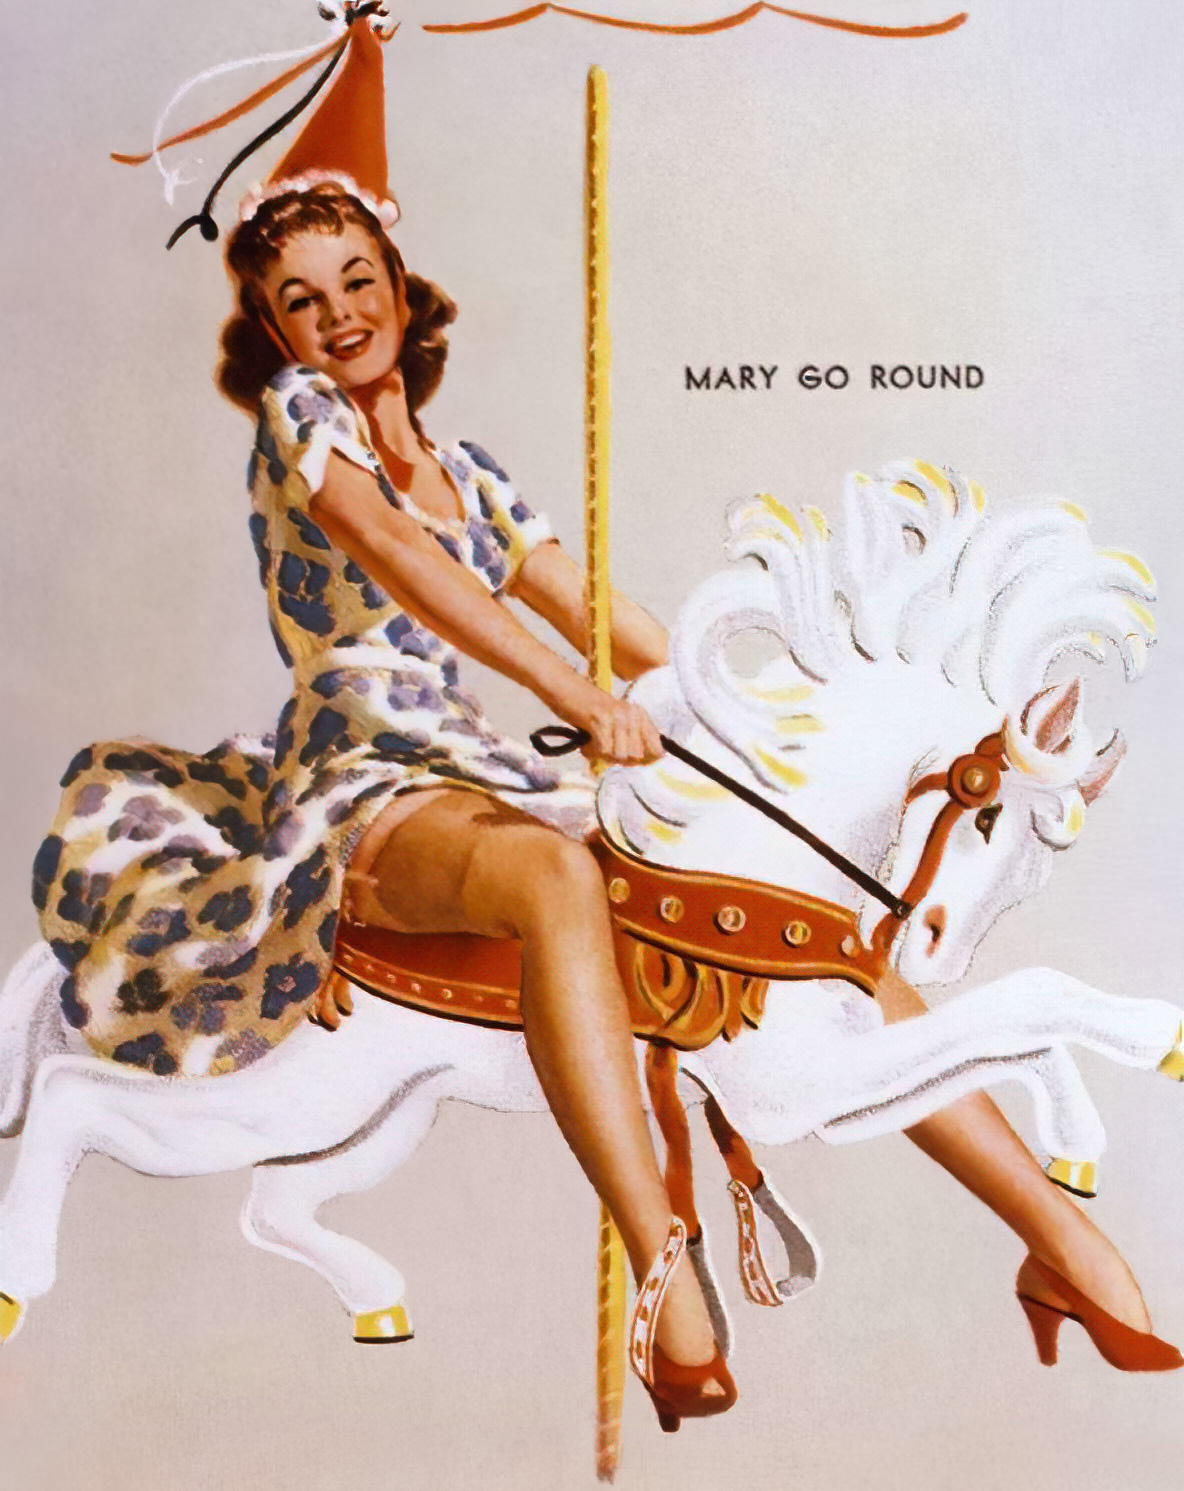 Mary go round